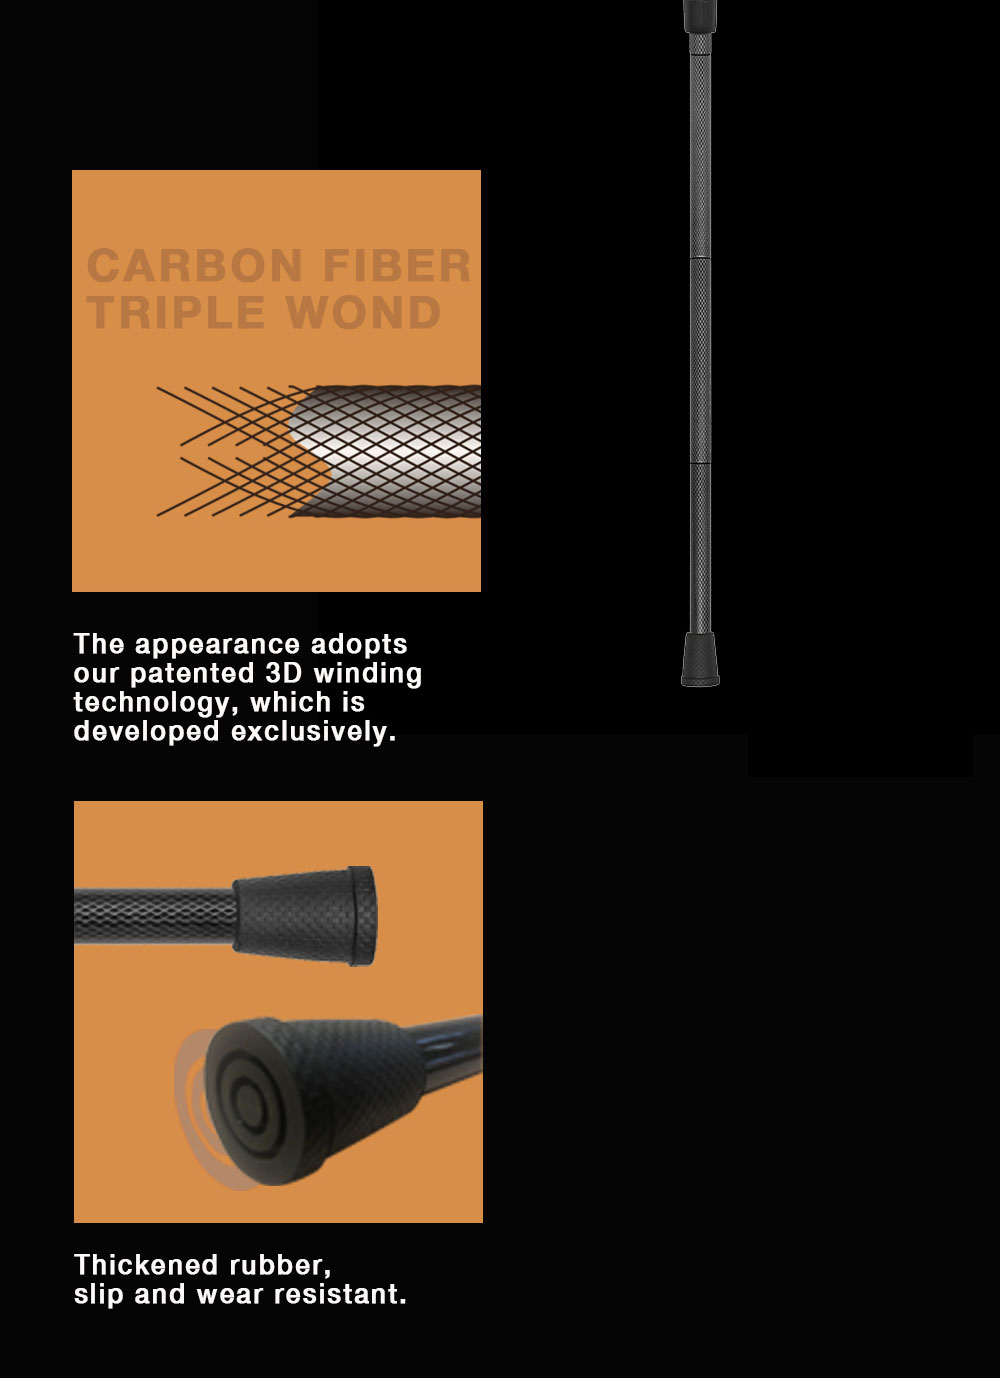 Black Folding Cane Carbon Fiber Walking Cane Custom Wholesale